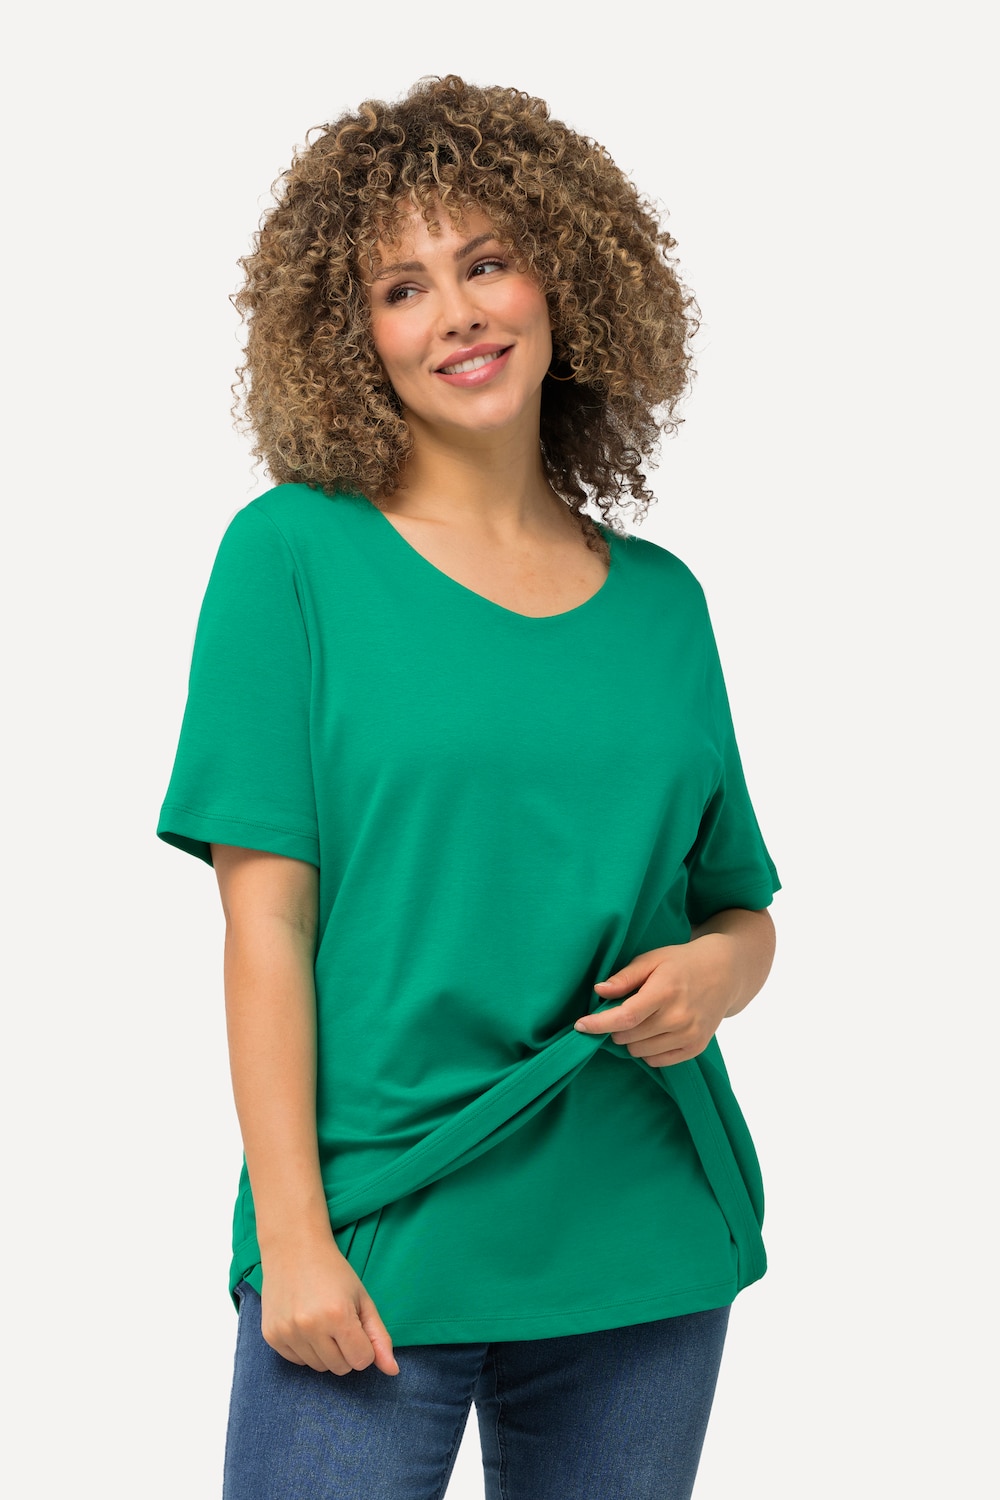 Große Größen Shirt, Damen, grün, Größe: 50/52, Baumwolle, Ulla Popken